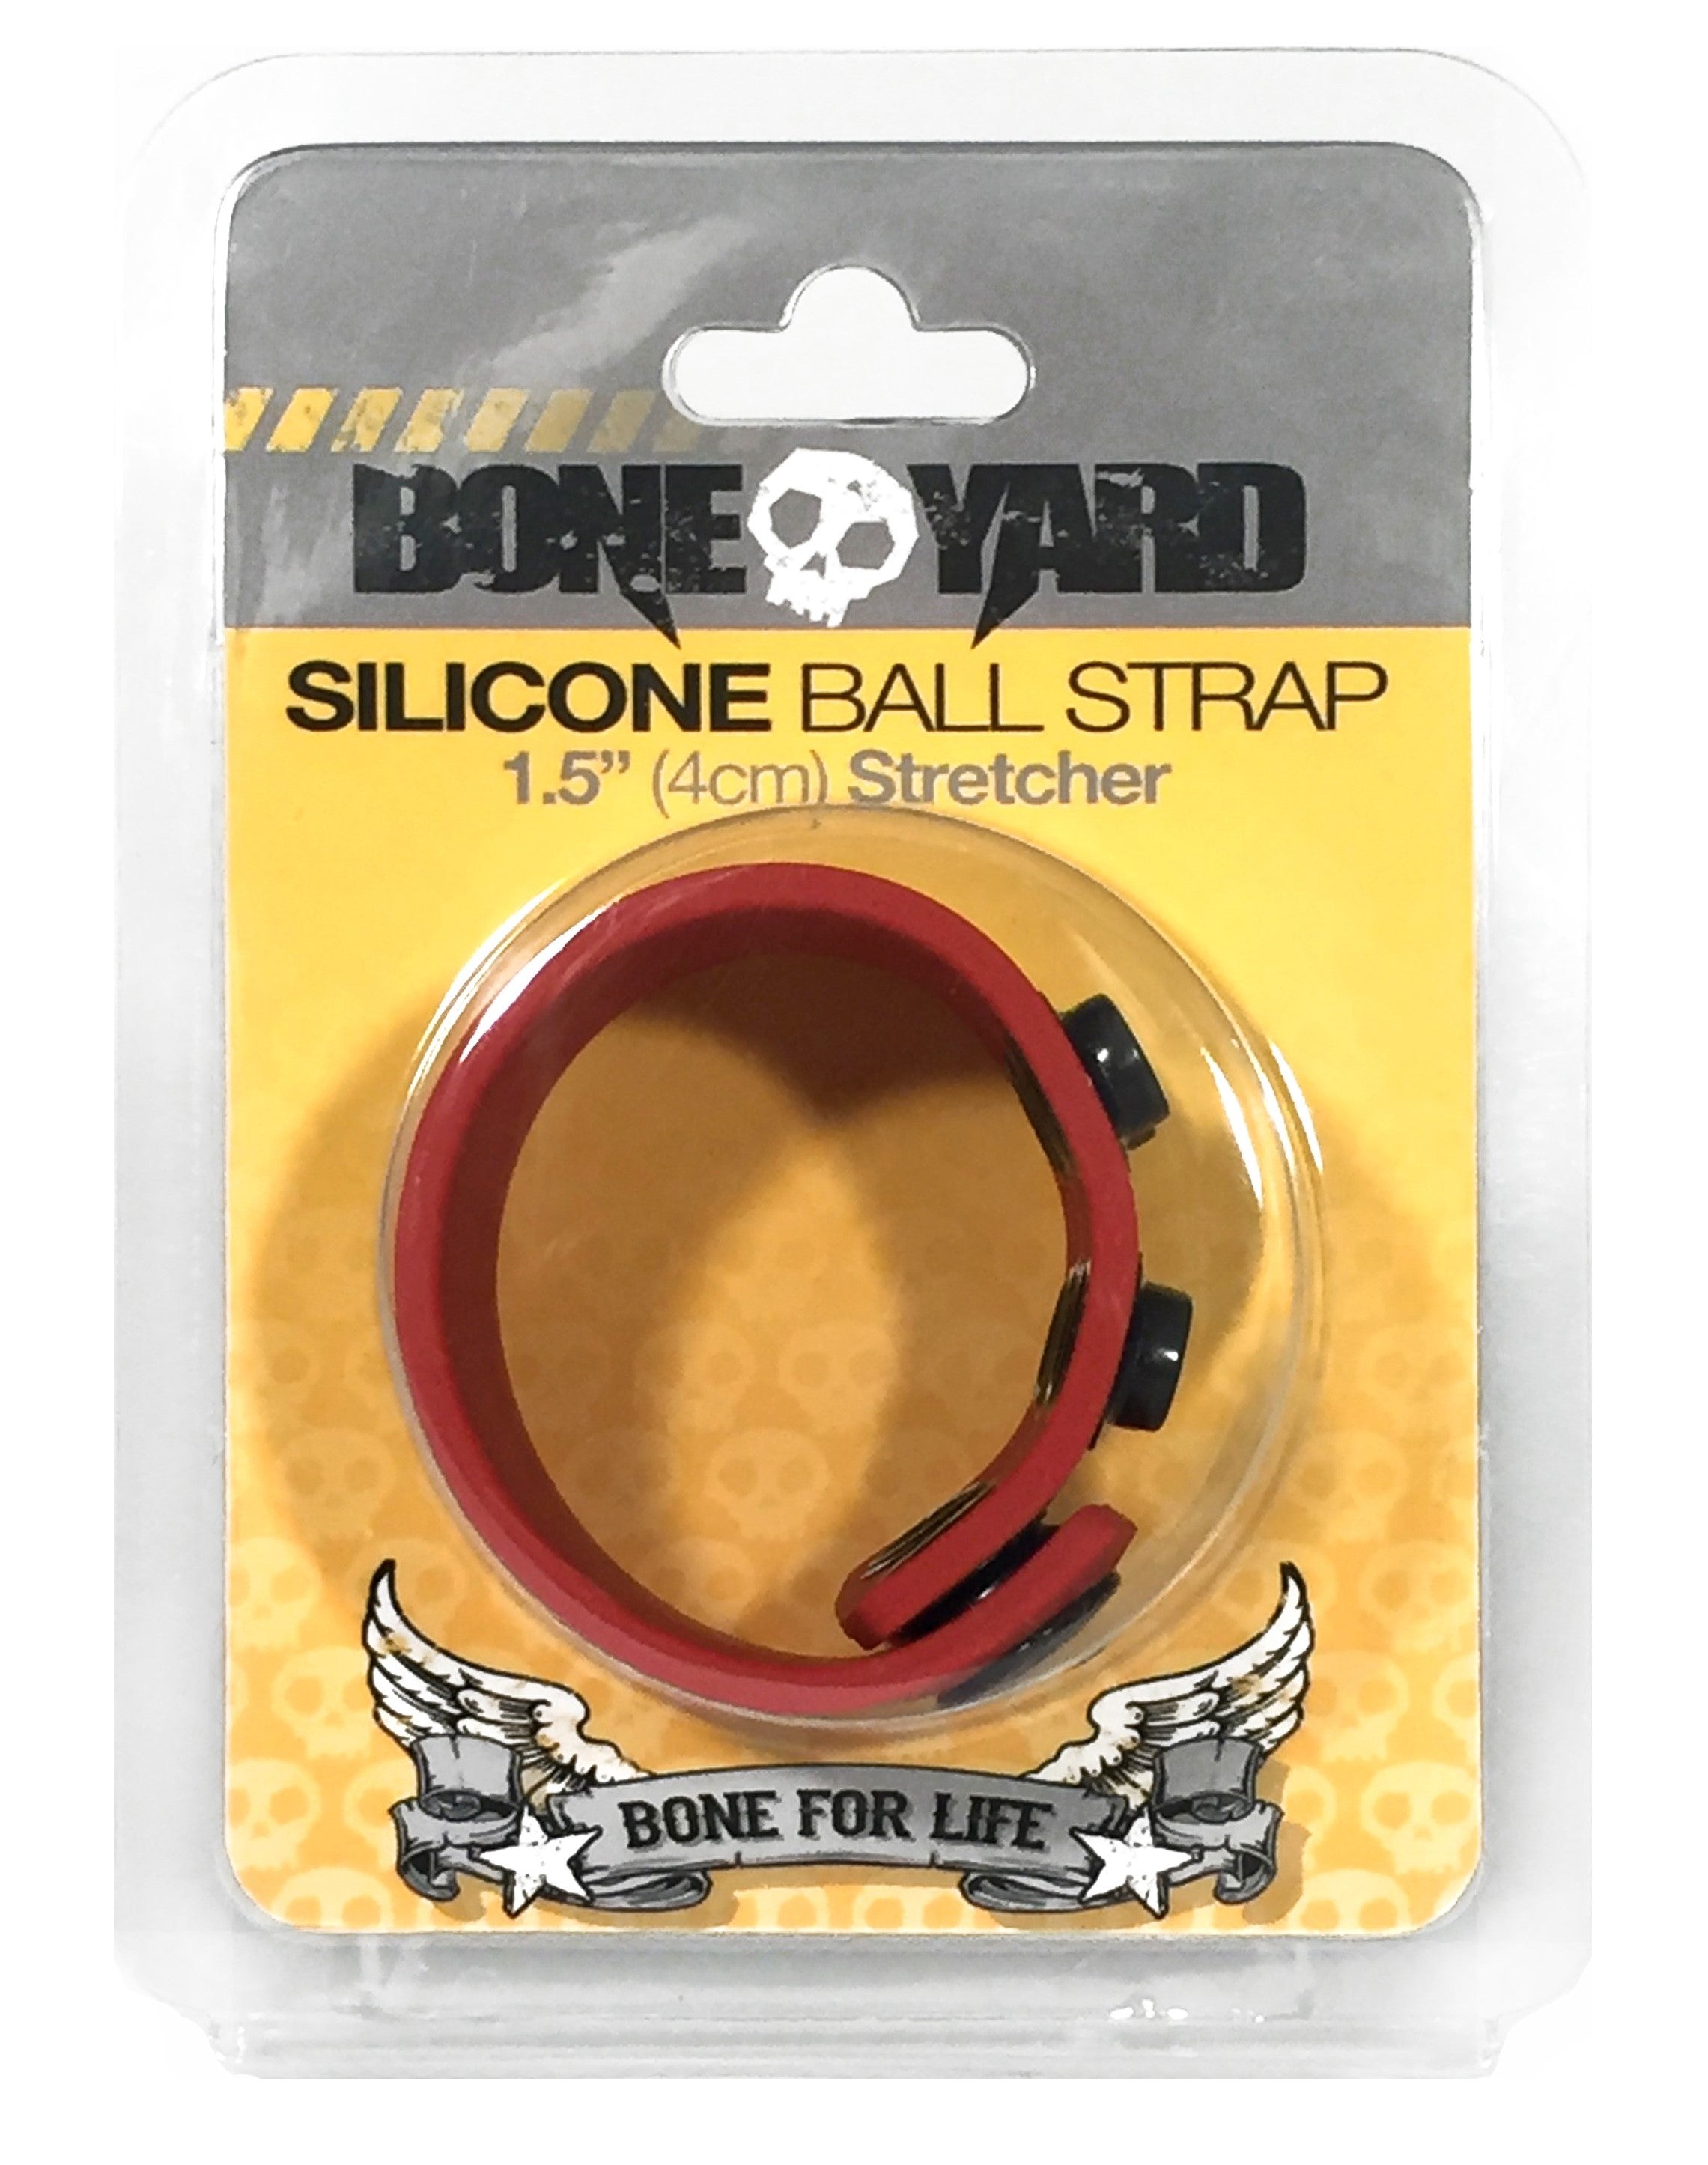 Boneyard Silicone Ball Strap 4cm Stretcher - Red-3